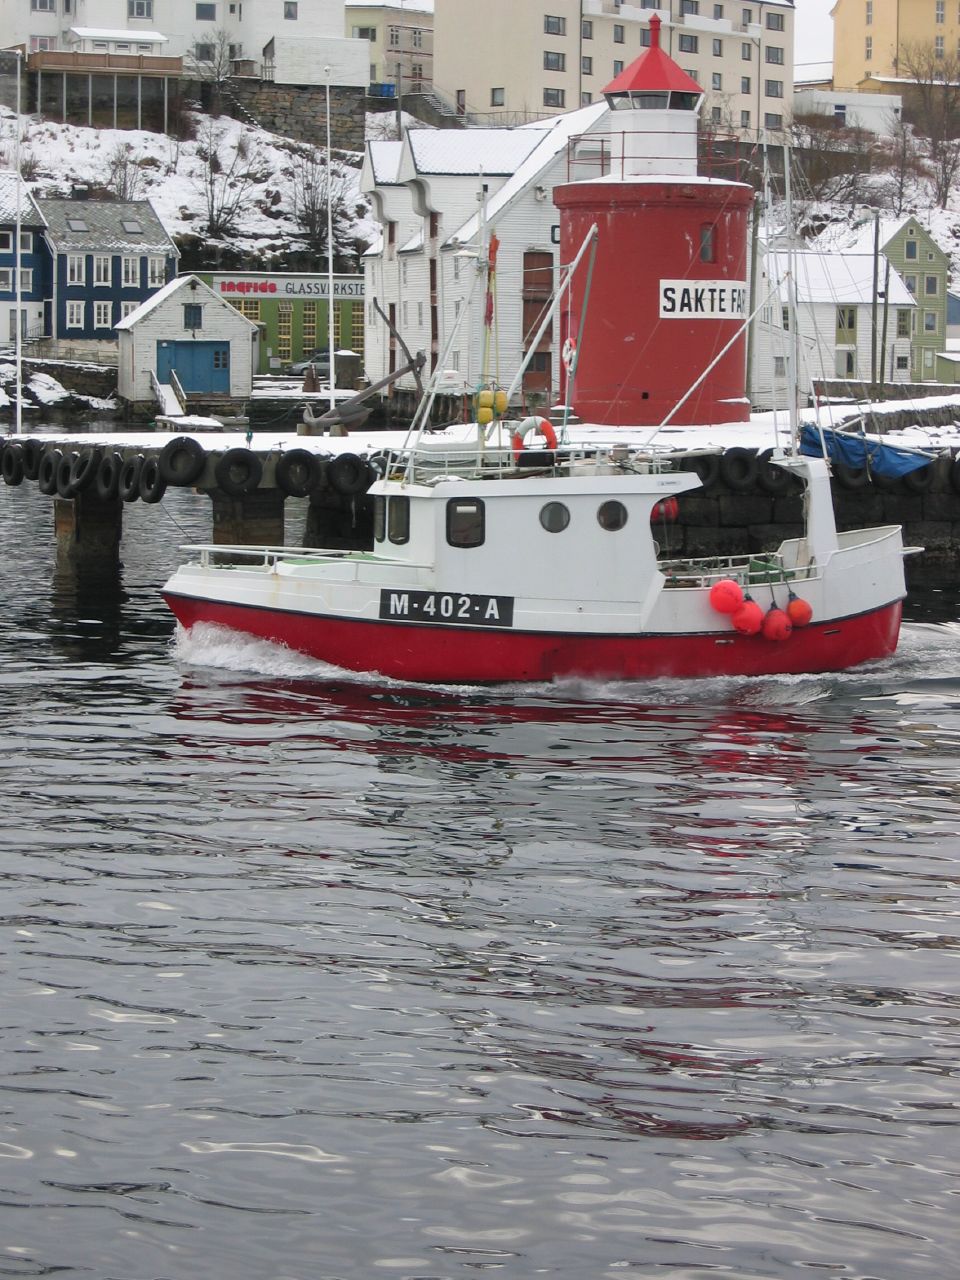 File:Small fishing boat.jpg - Wikimedia Commons